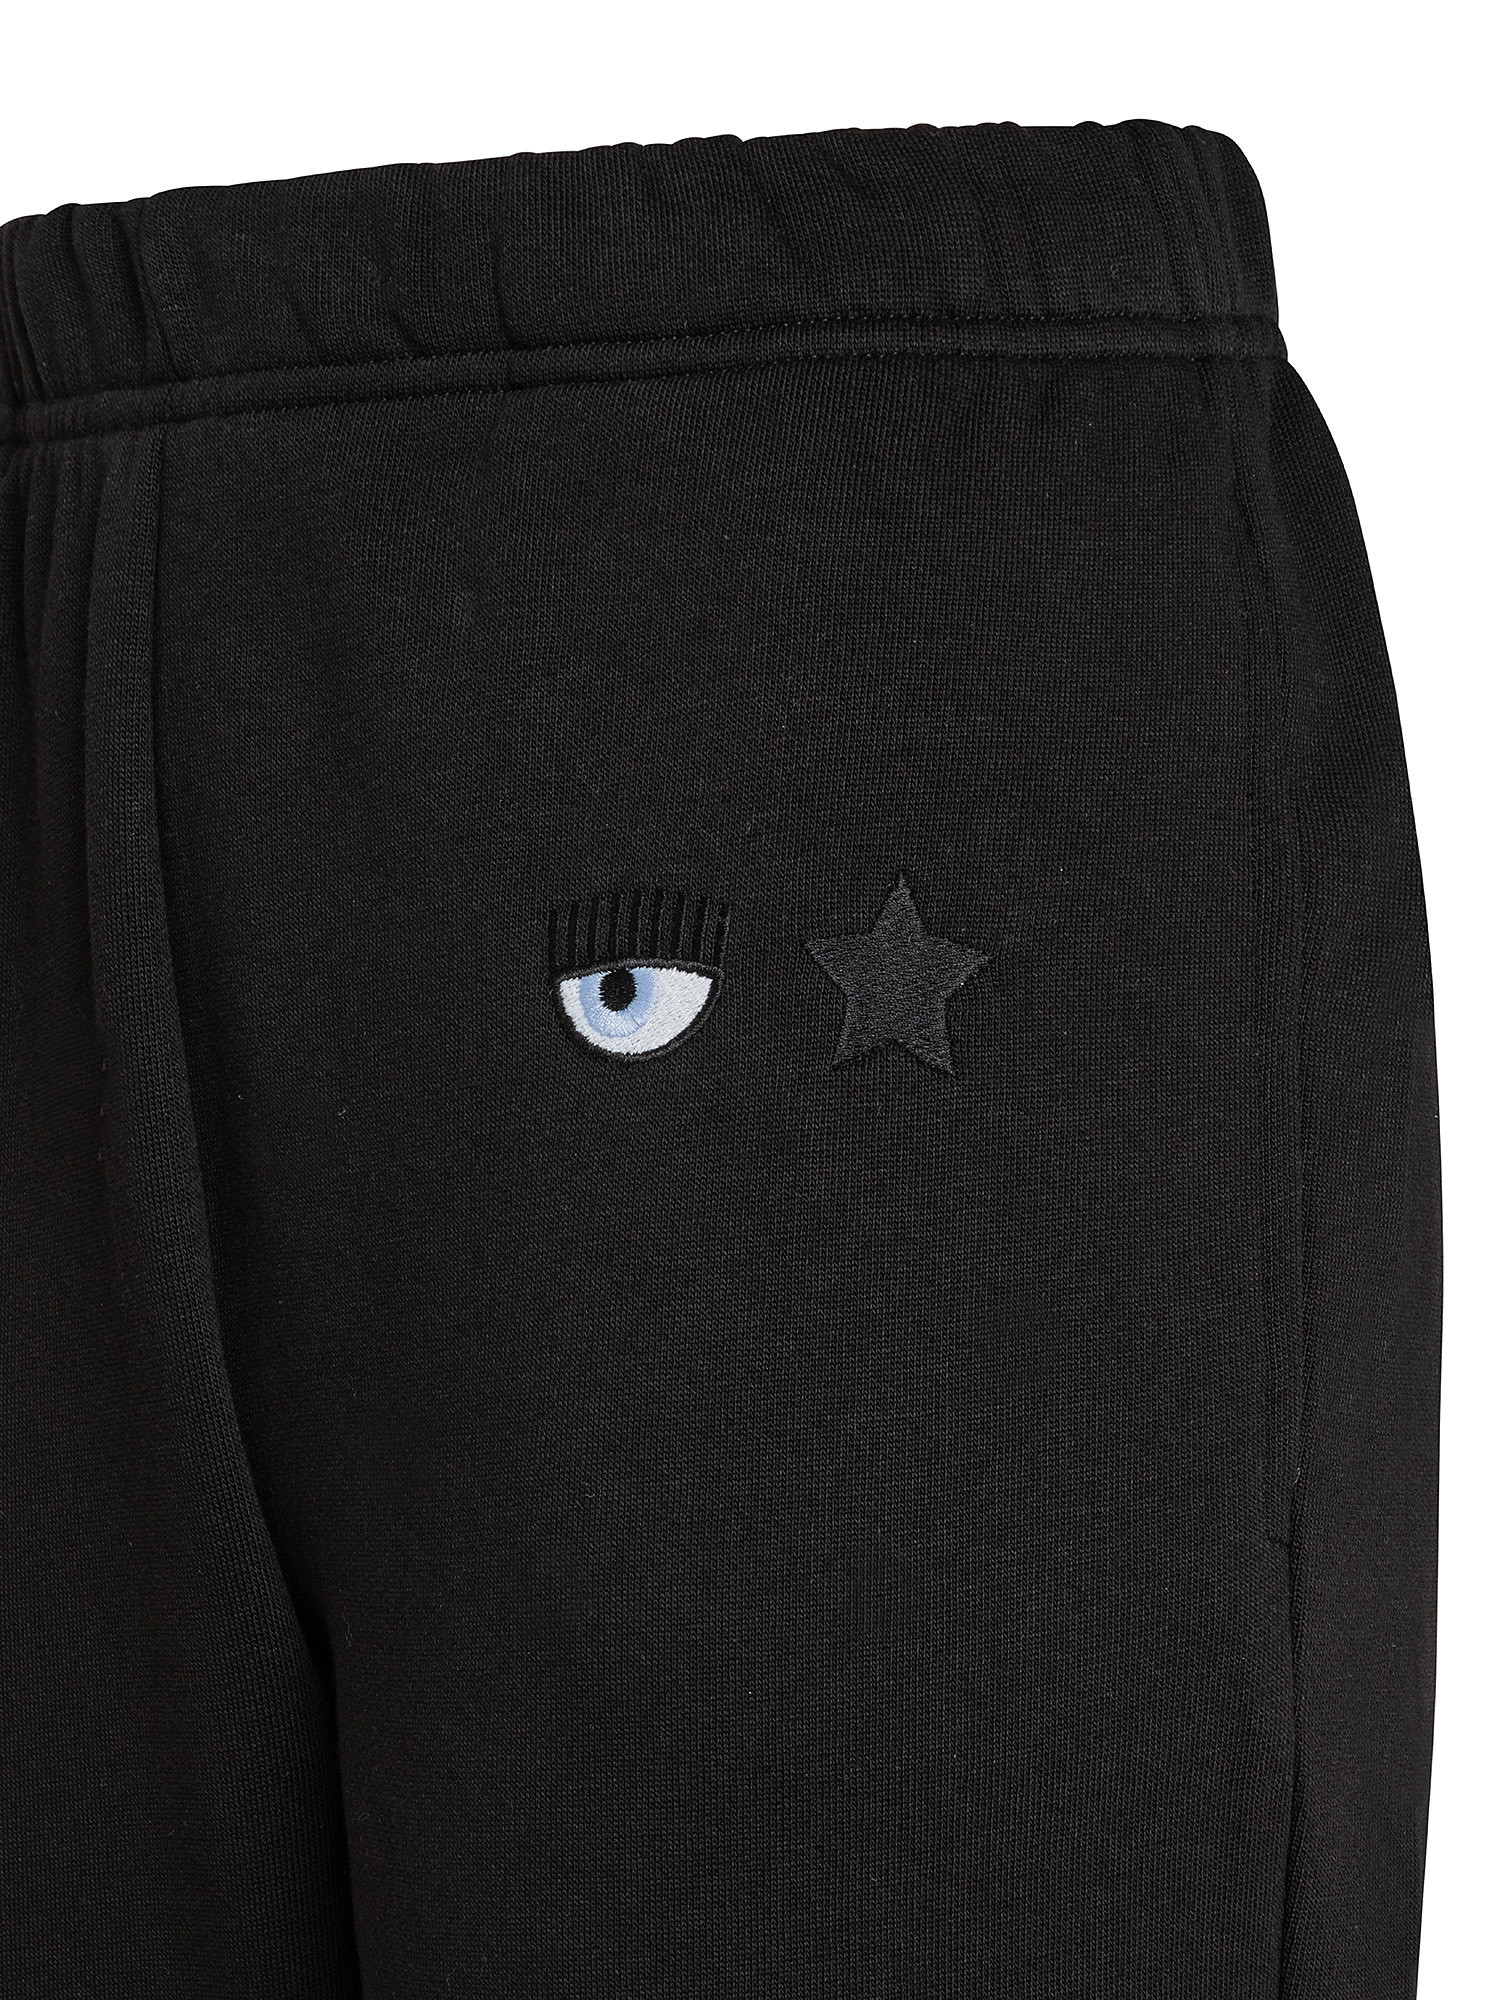 Eye Star Pants, Black, large image number 2